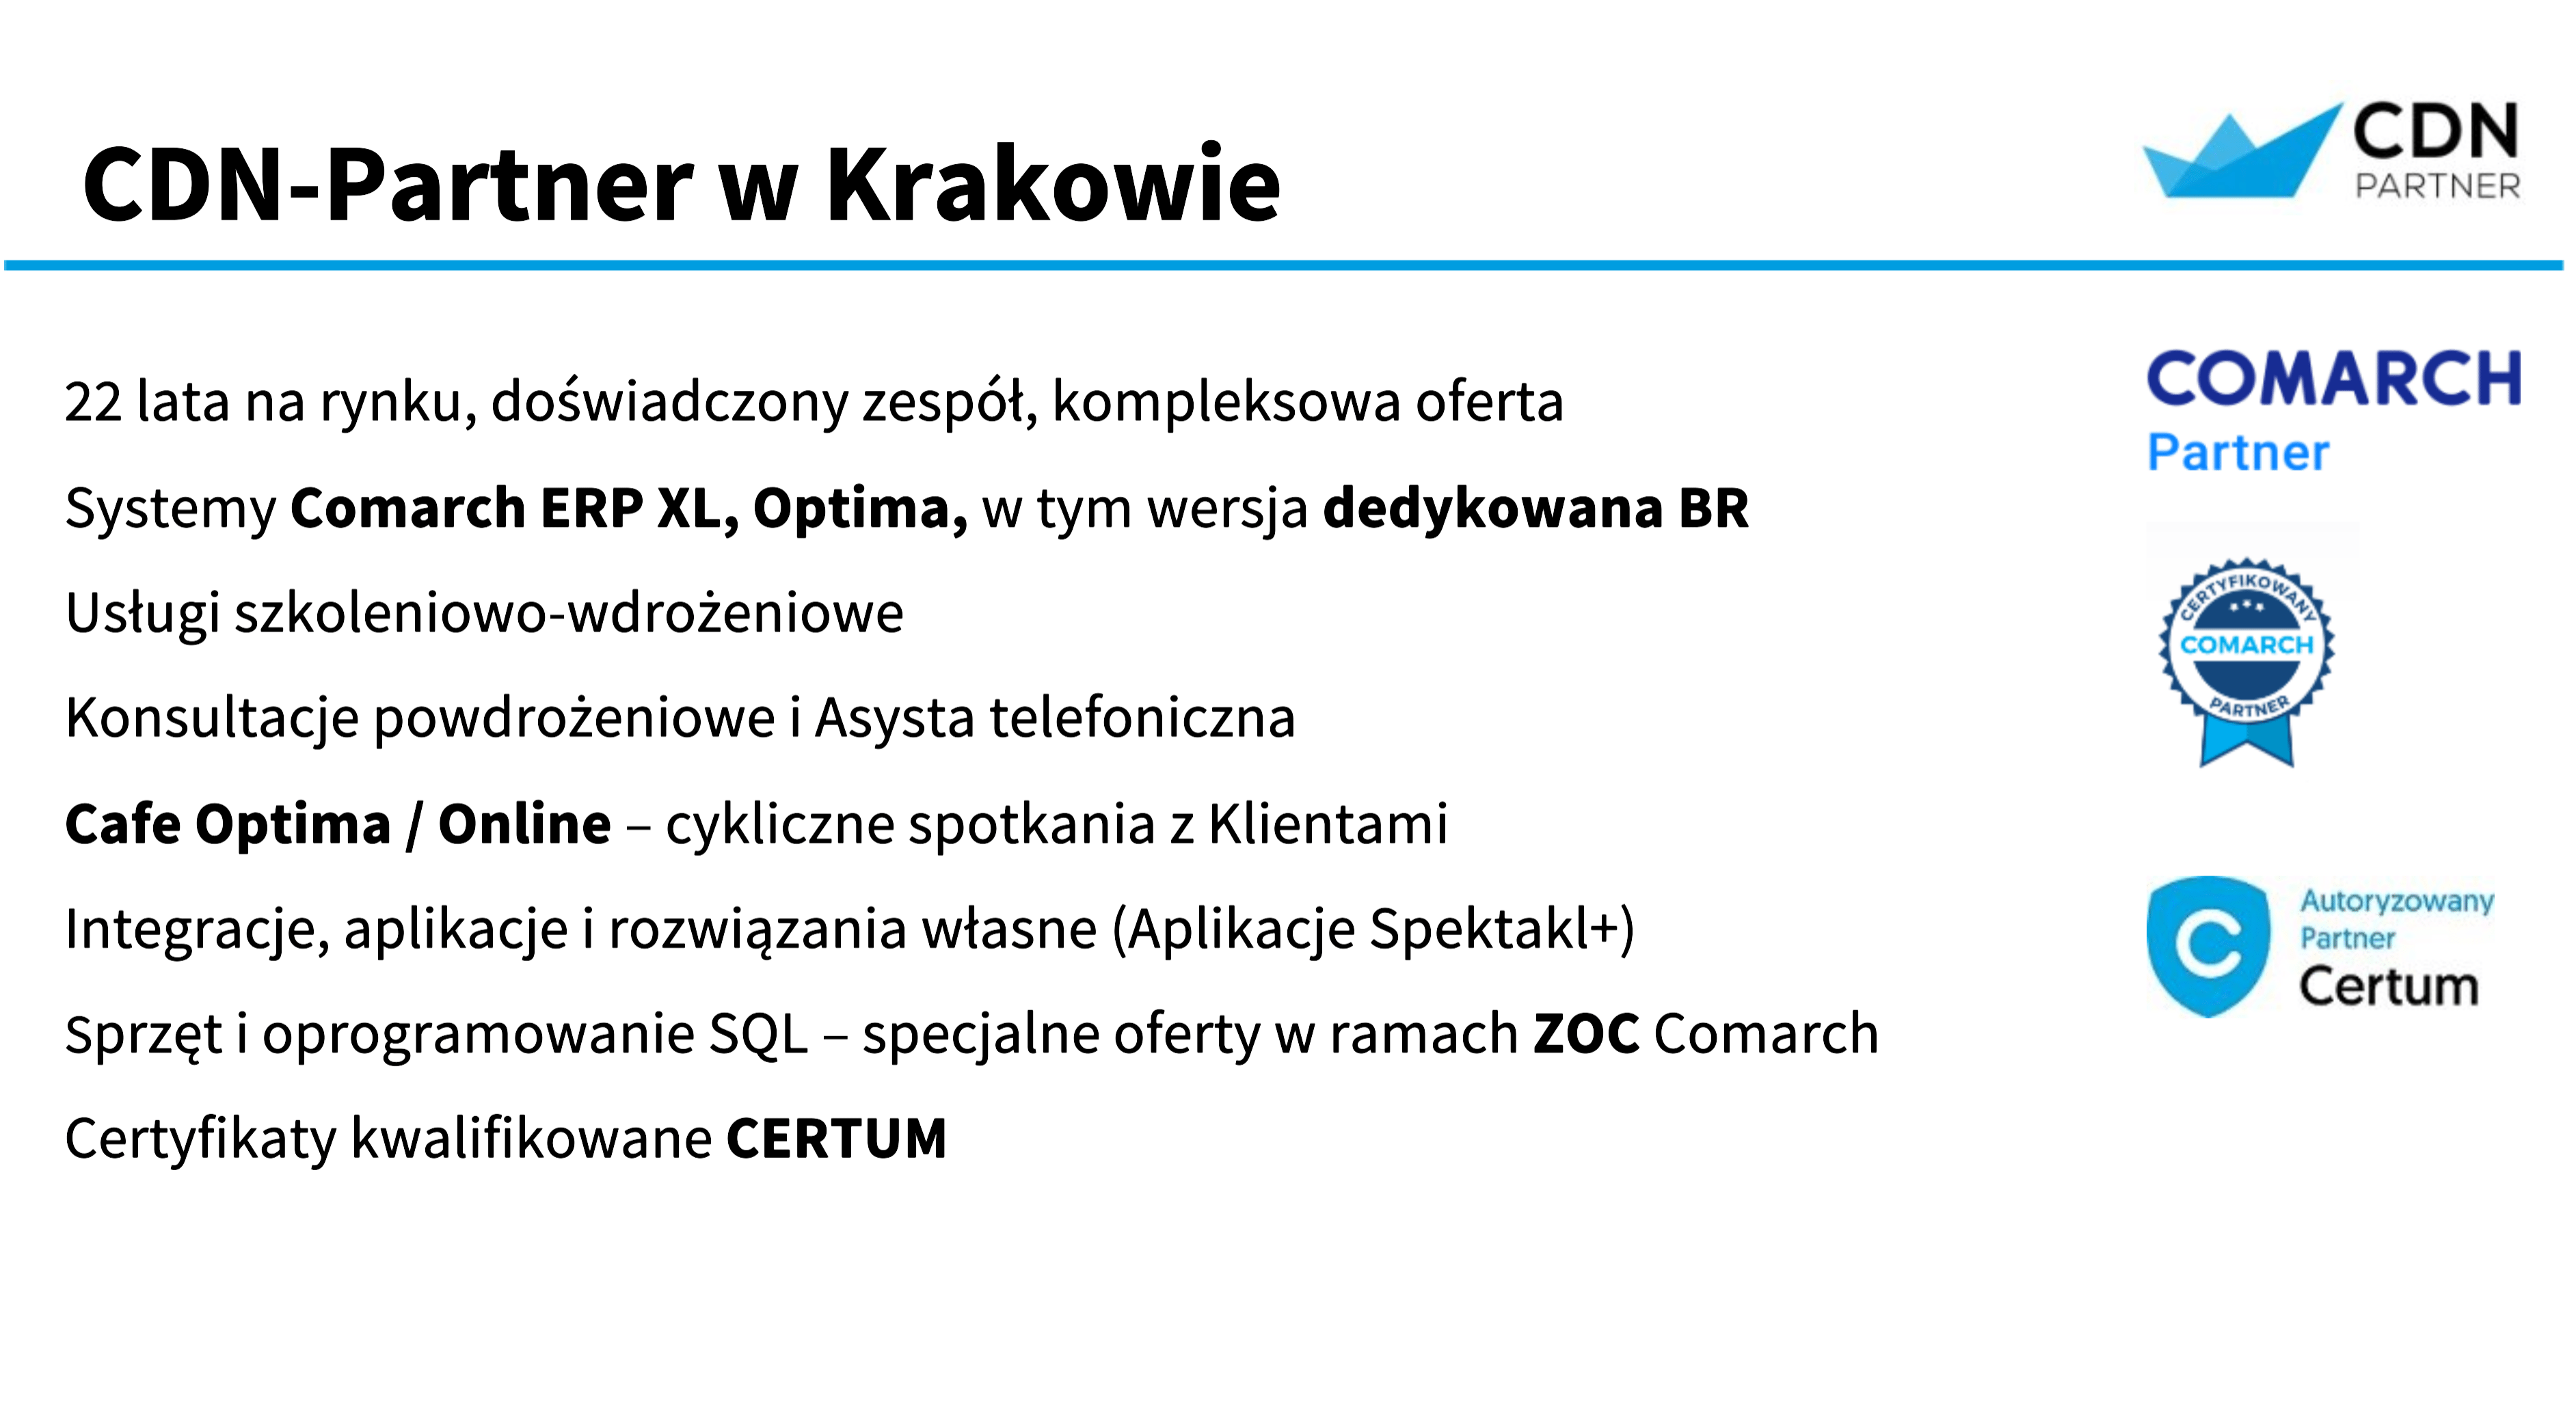 CDN-Partner w Krakowie - Partner Comarch, Partner CERTUM